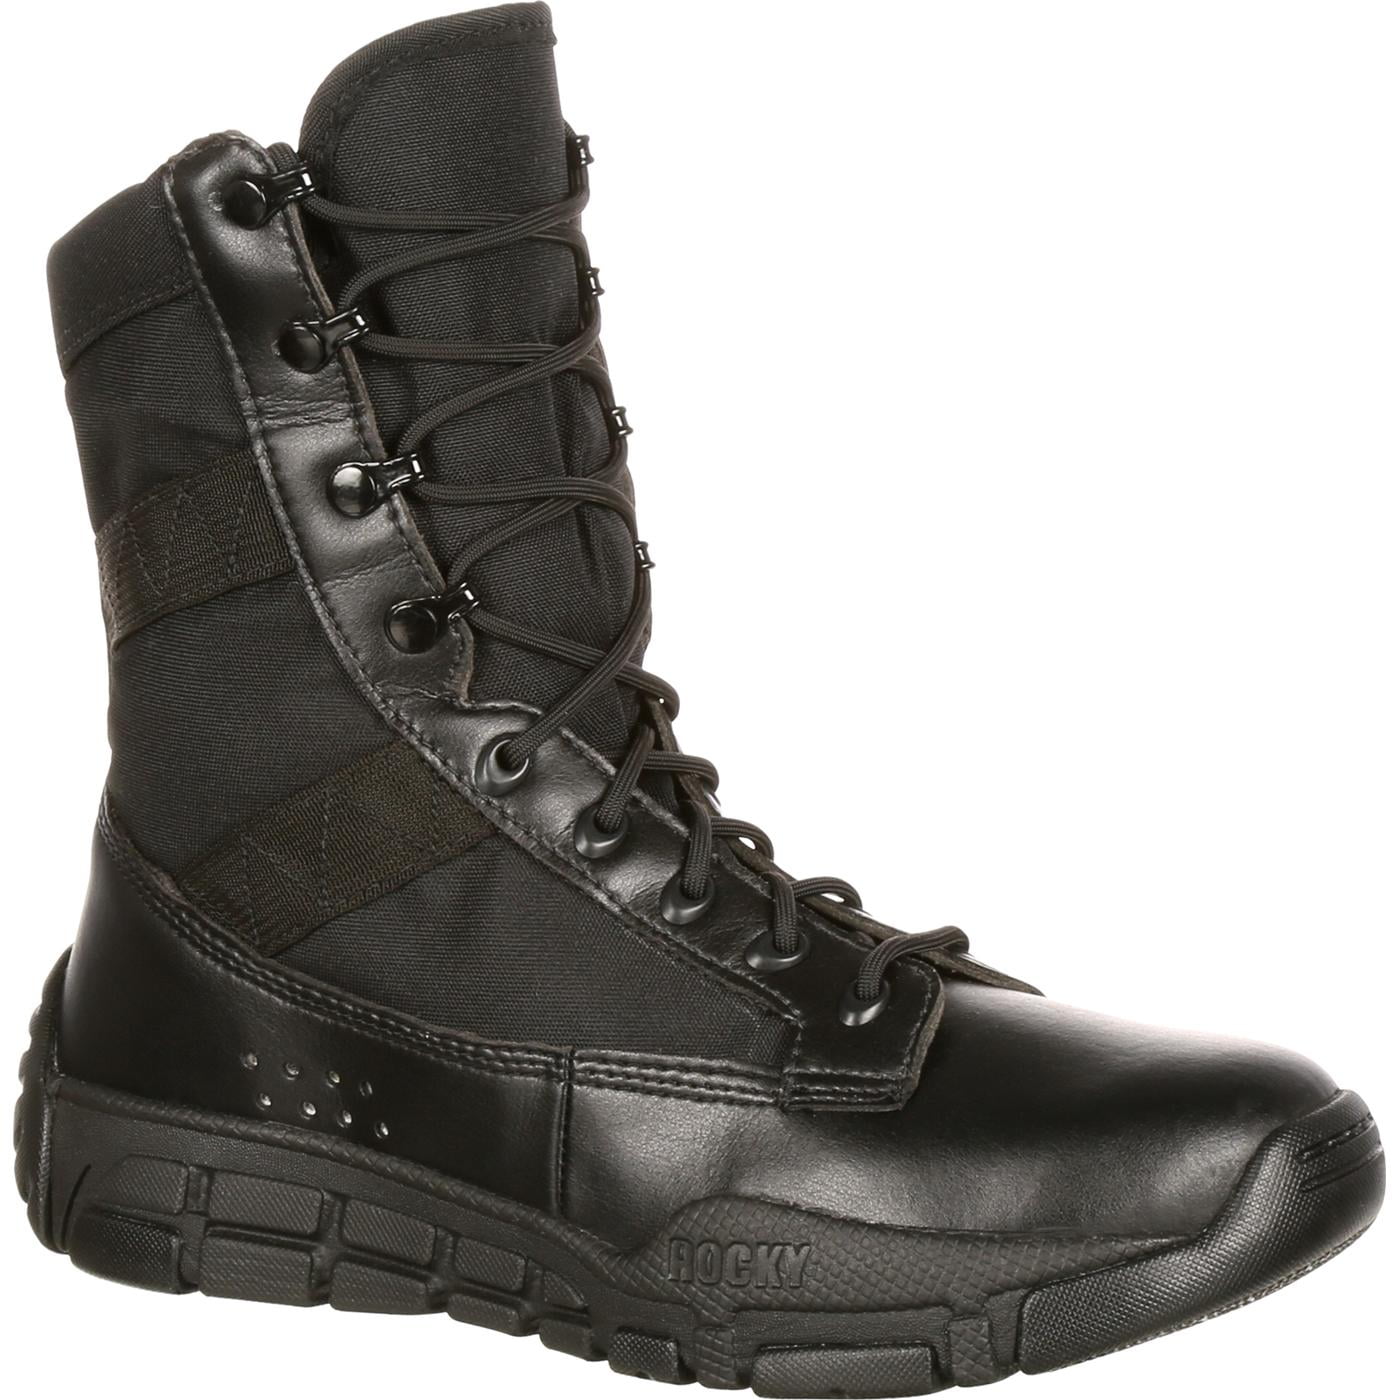 black military boots near me